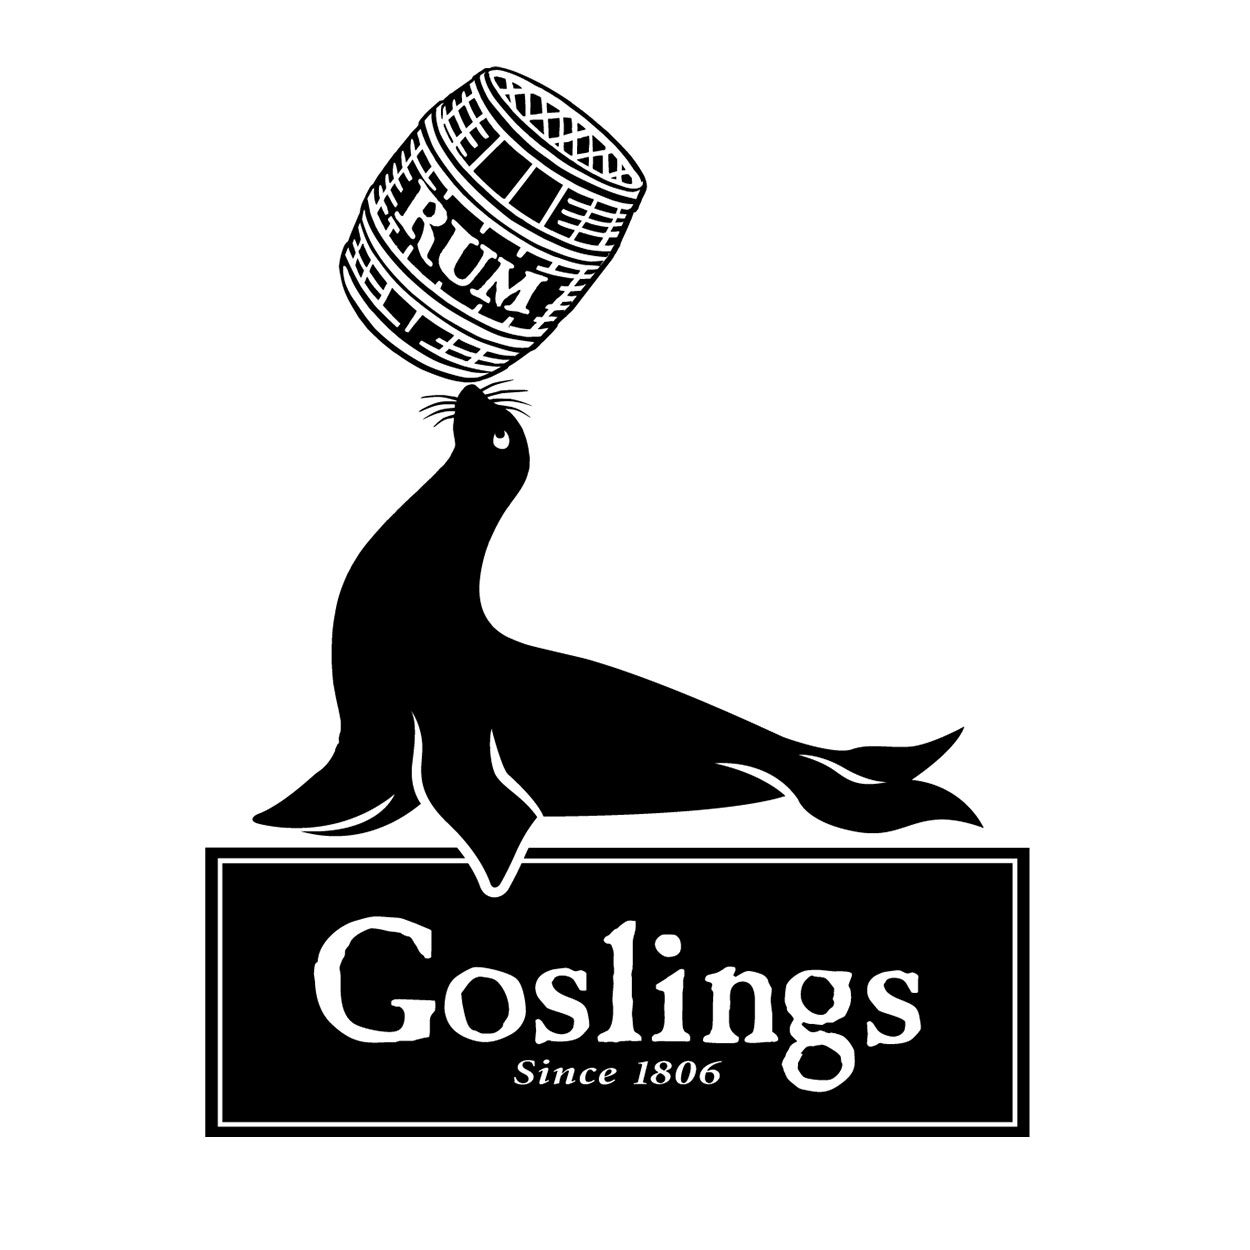 Goslings logo